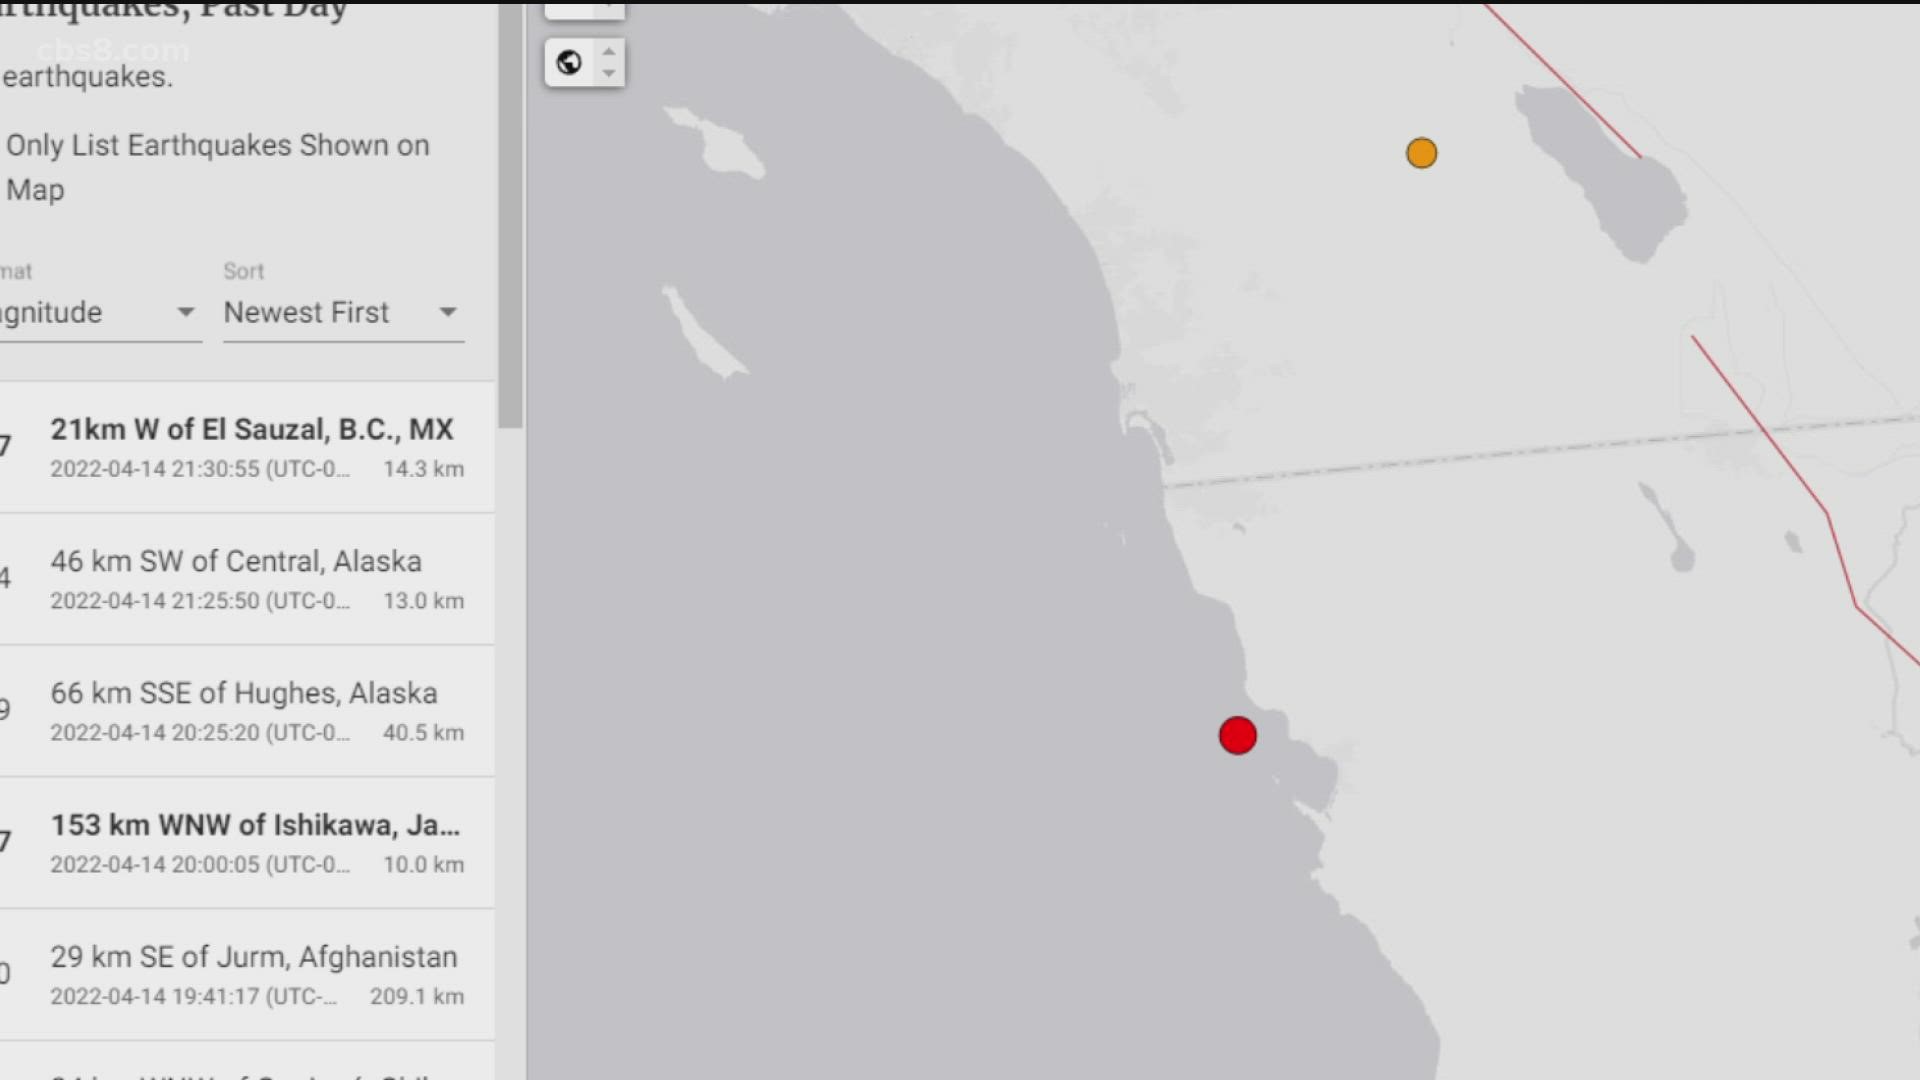 USGS is reporting a 4.6 magnitude earthquake off the coast of Mexico near Ensenada.